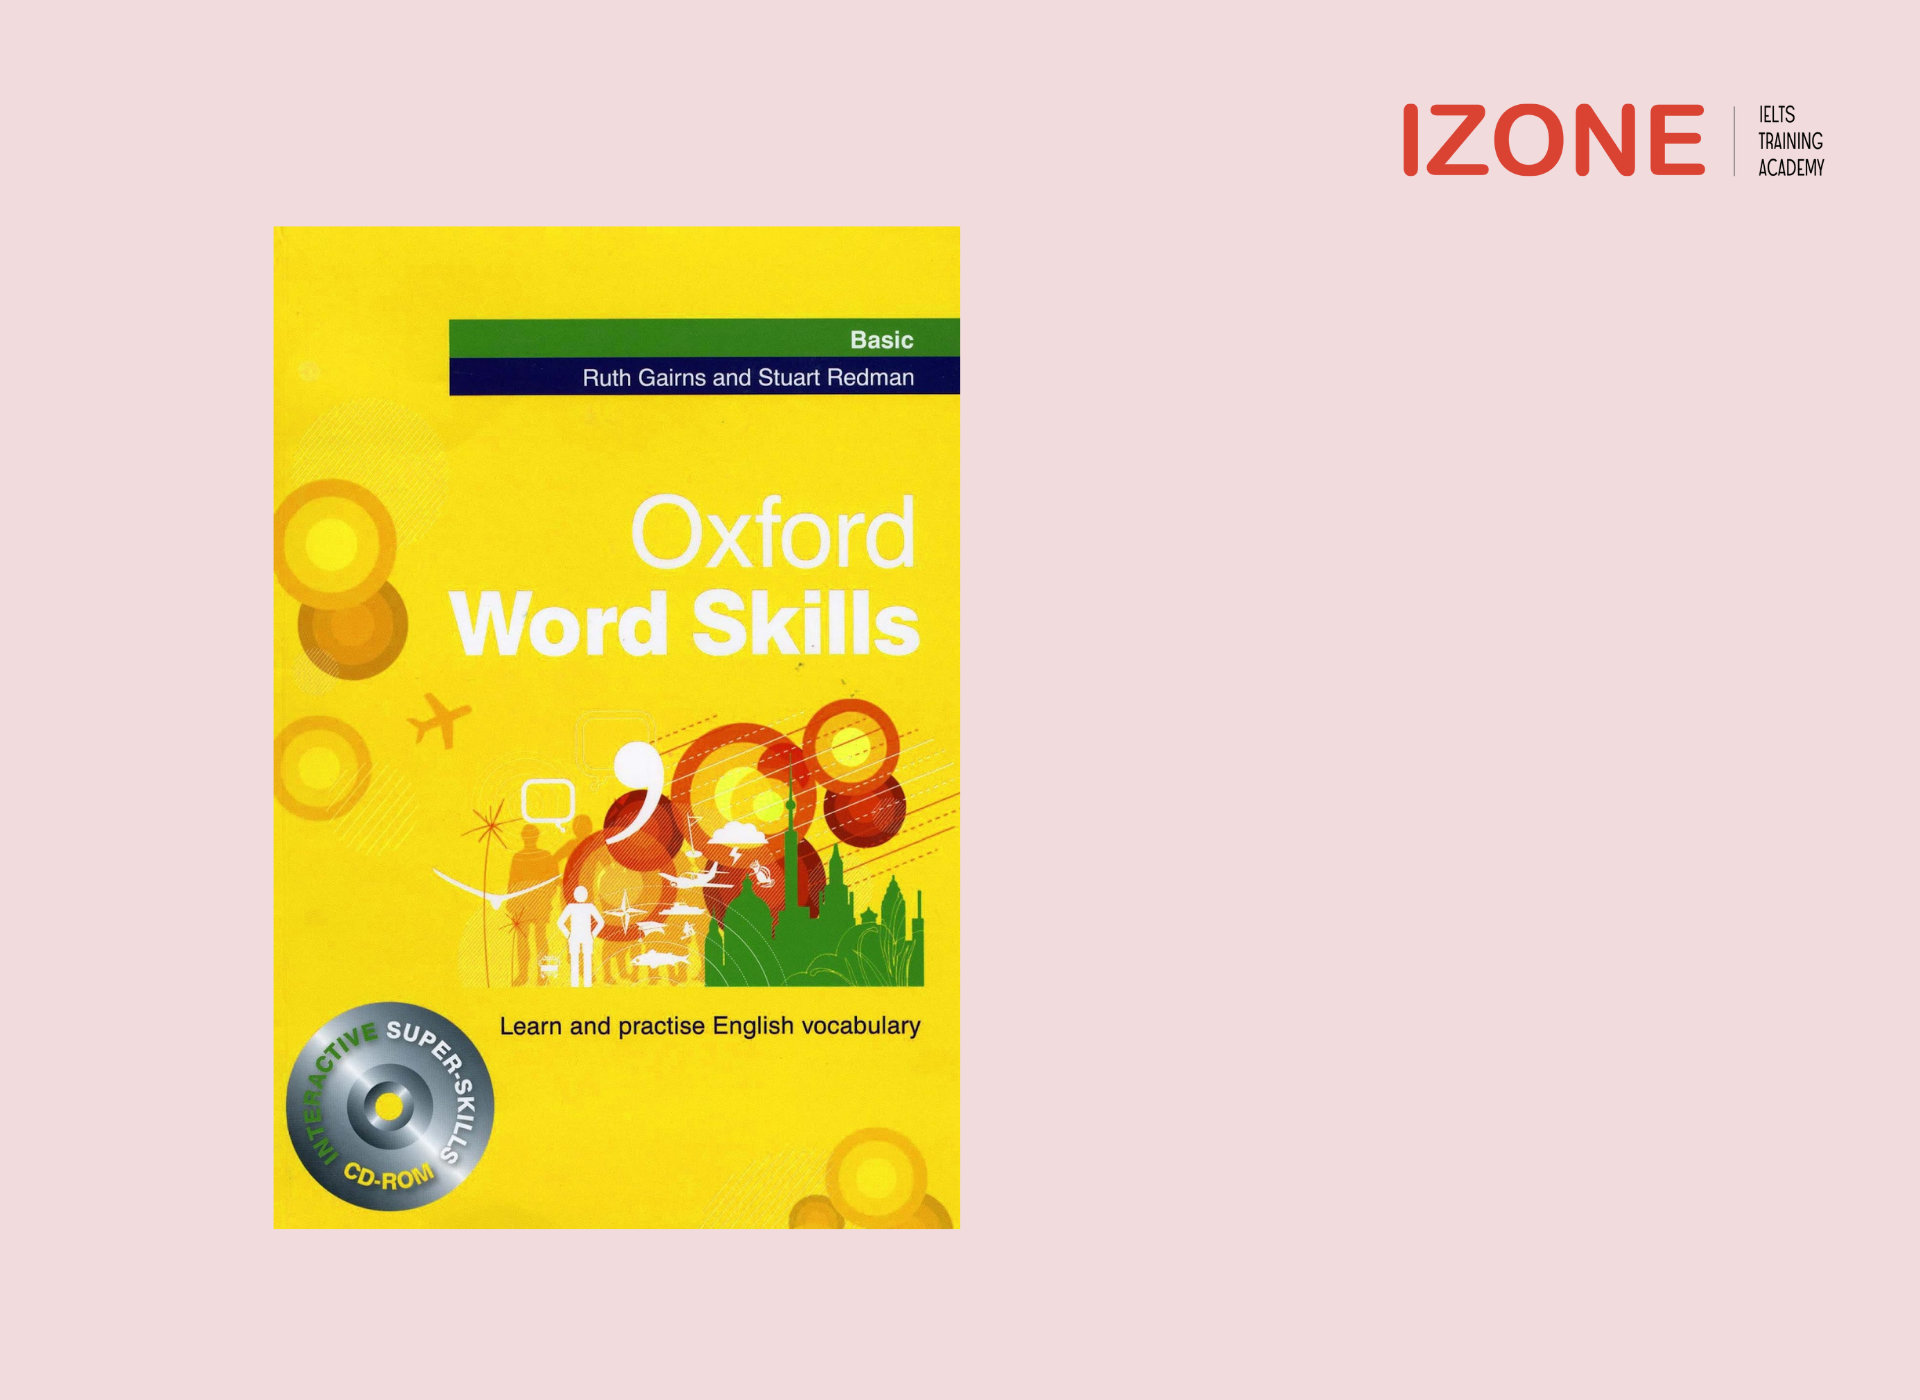 Oxford Words Skills